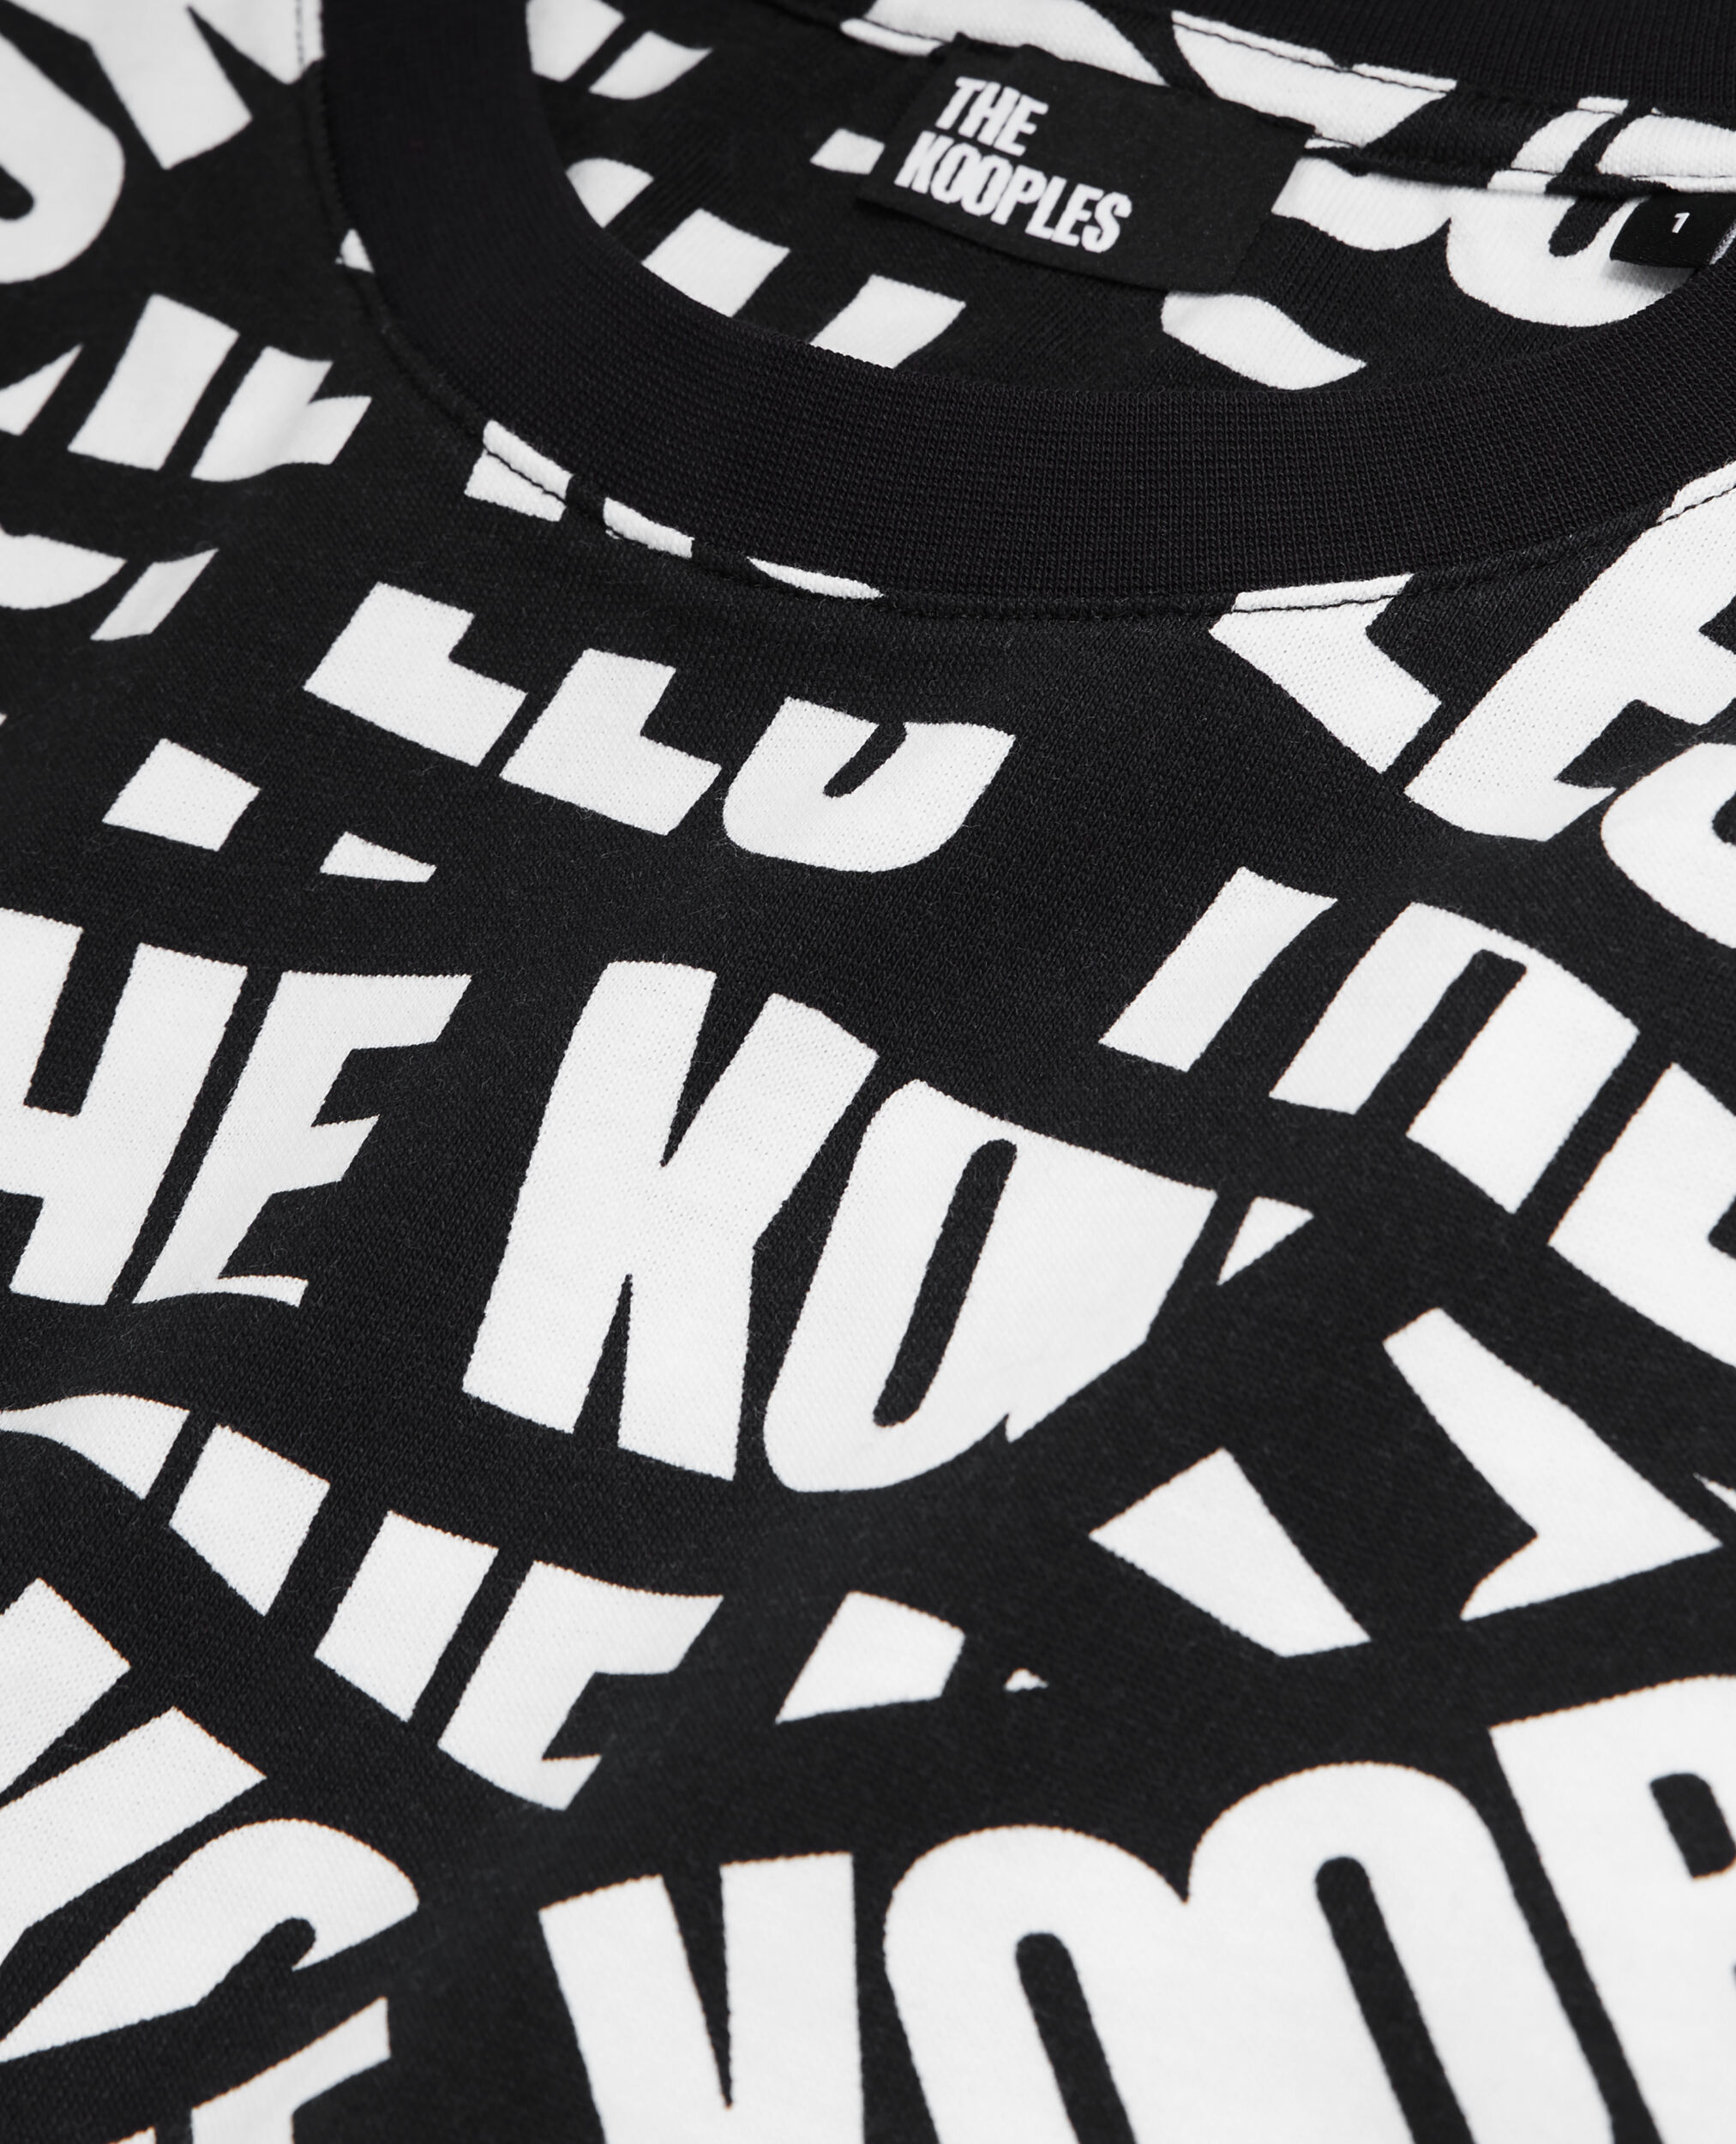 Camiseta logotipo The Kooples, BLACK / WHITE, hi-res image number null